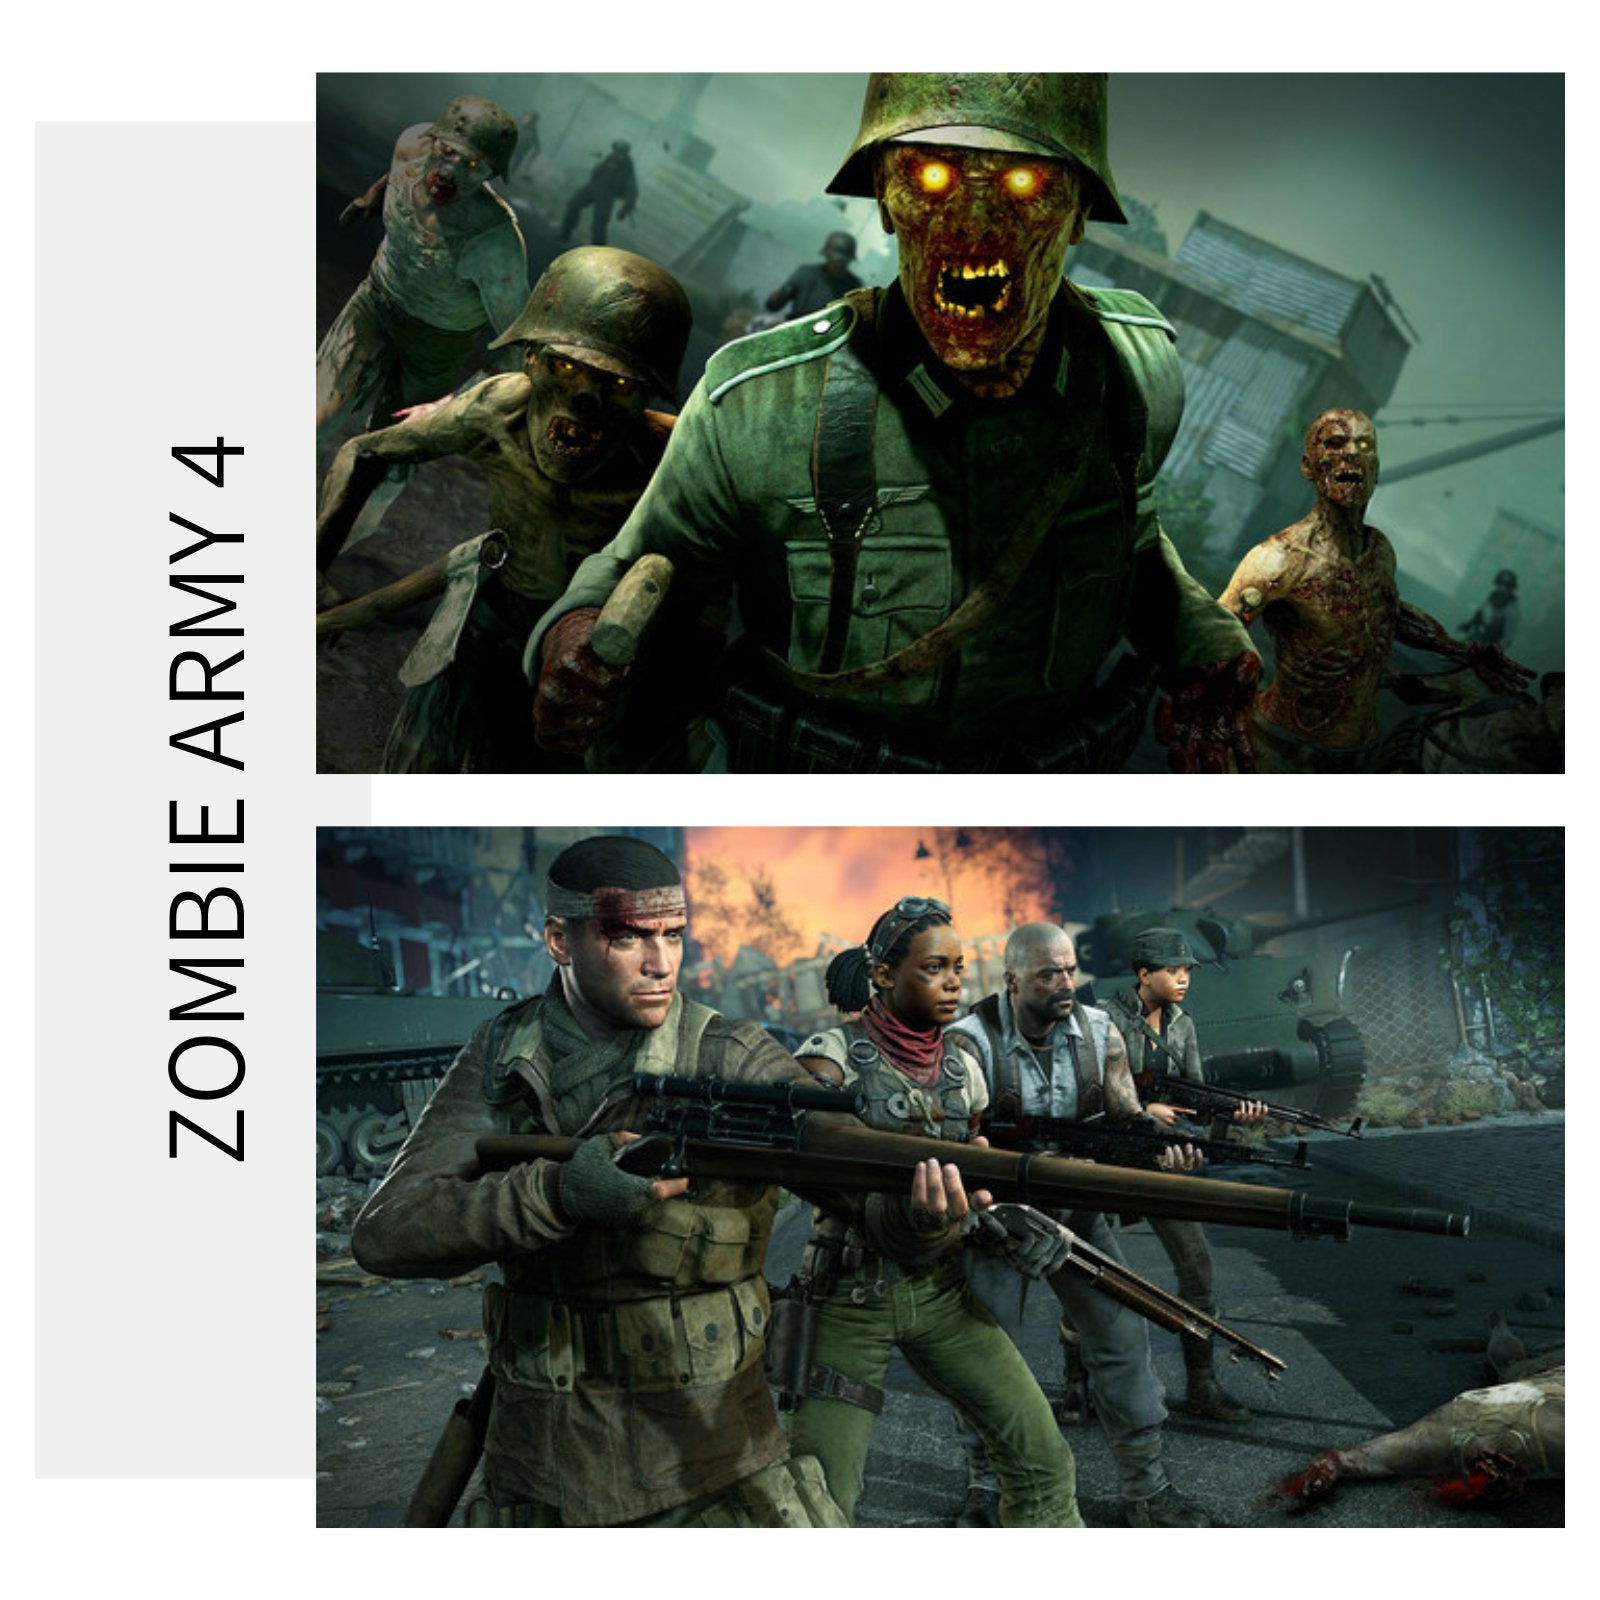 Zombie Army 4 | PC Game Steam Key - Killonyi